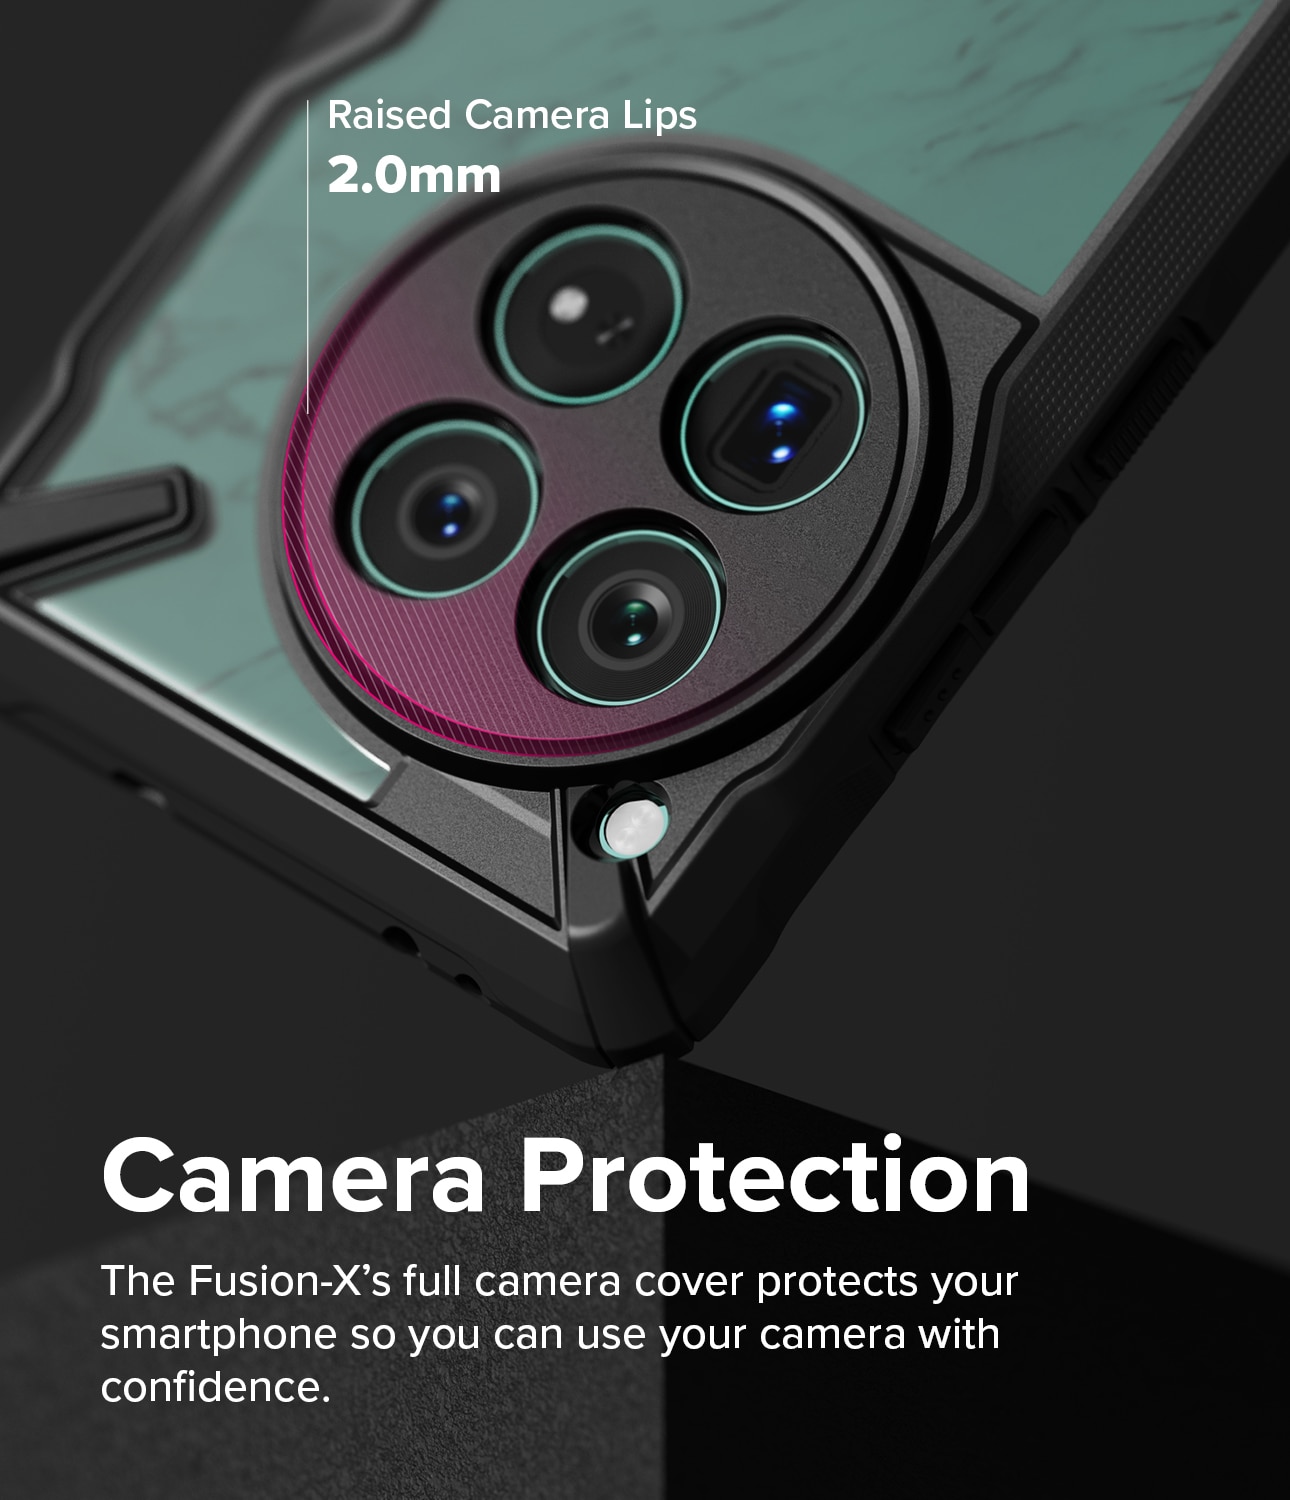 Funda Fusion X OnePlus 12 negro